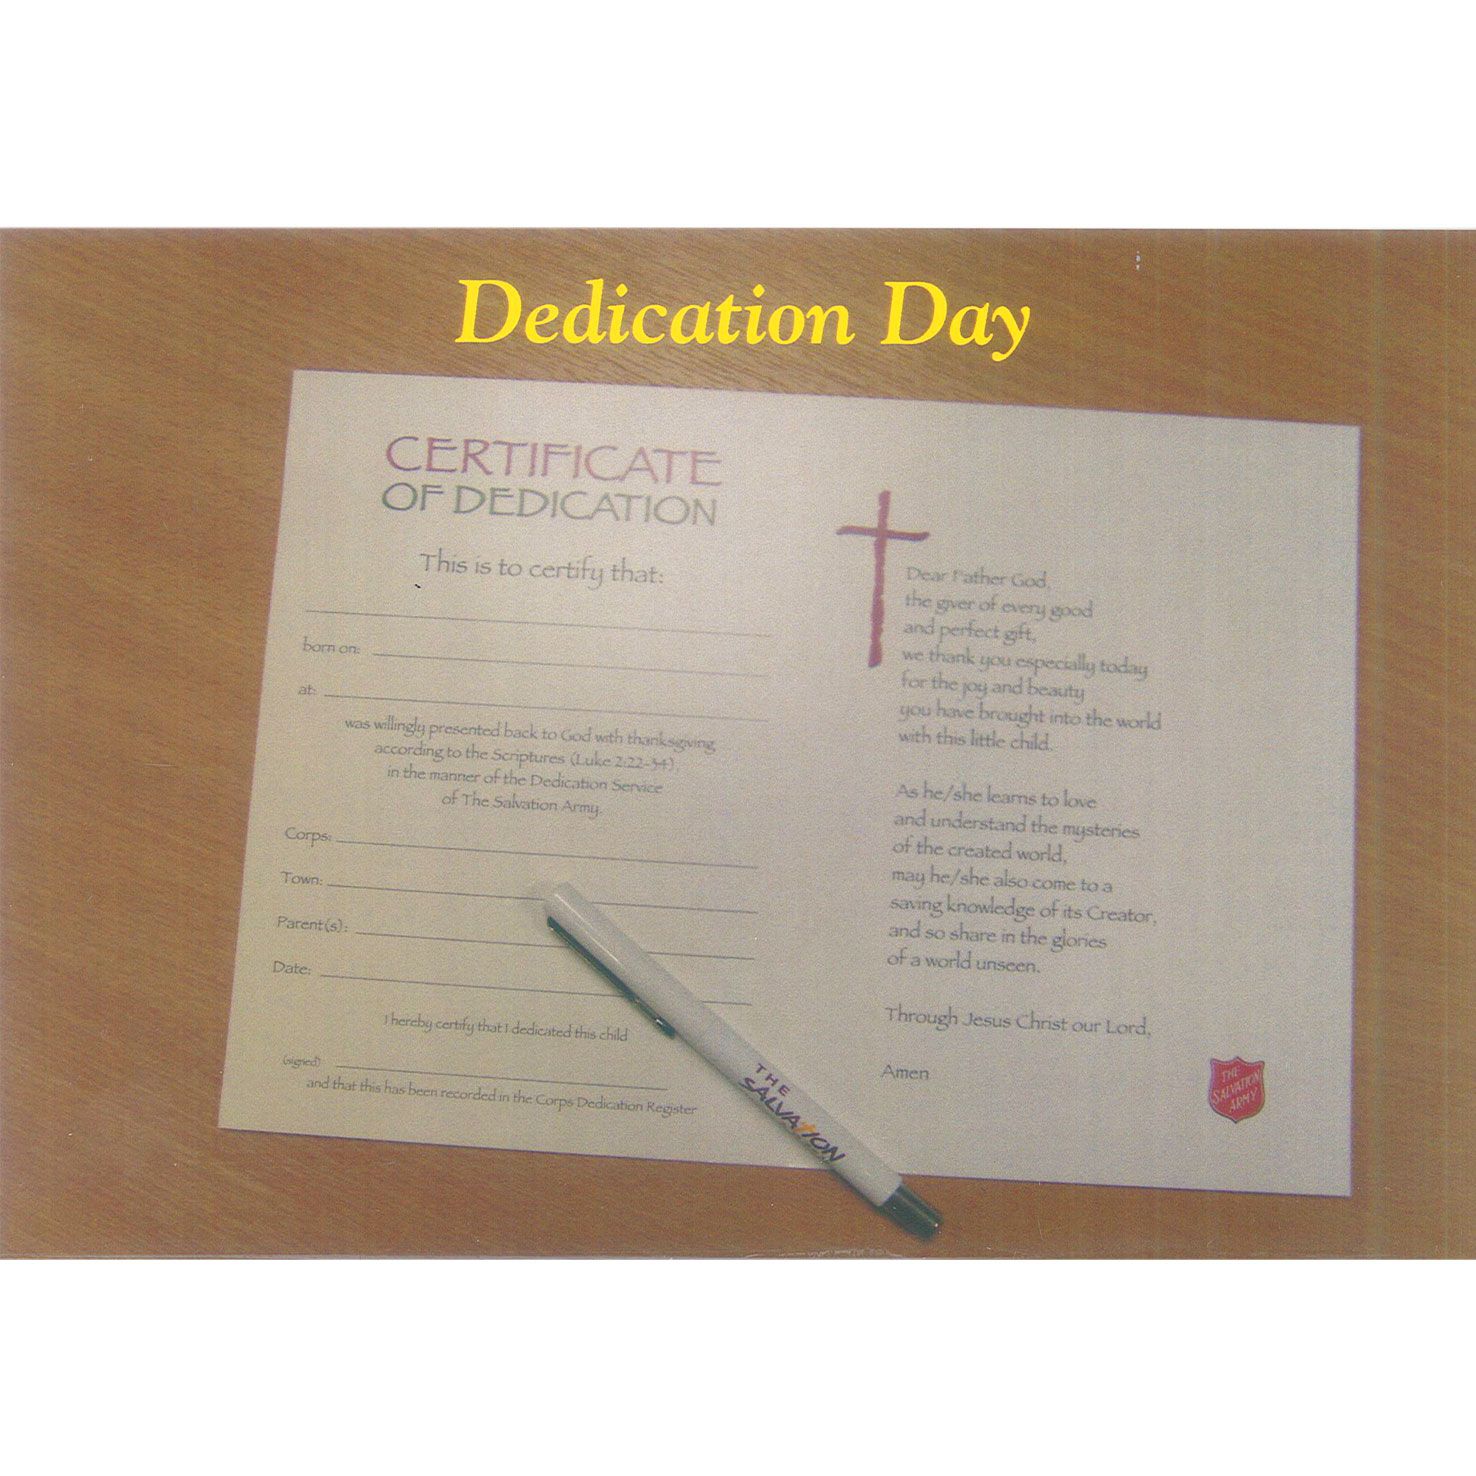 Dedication Card - Certificate